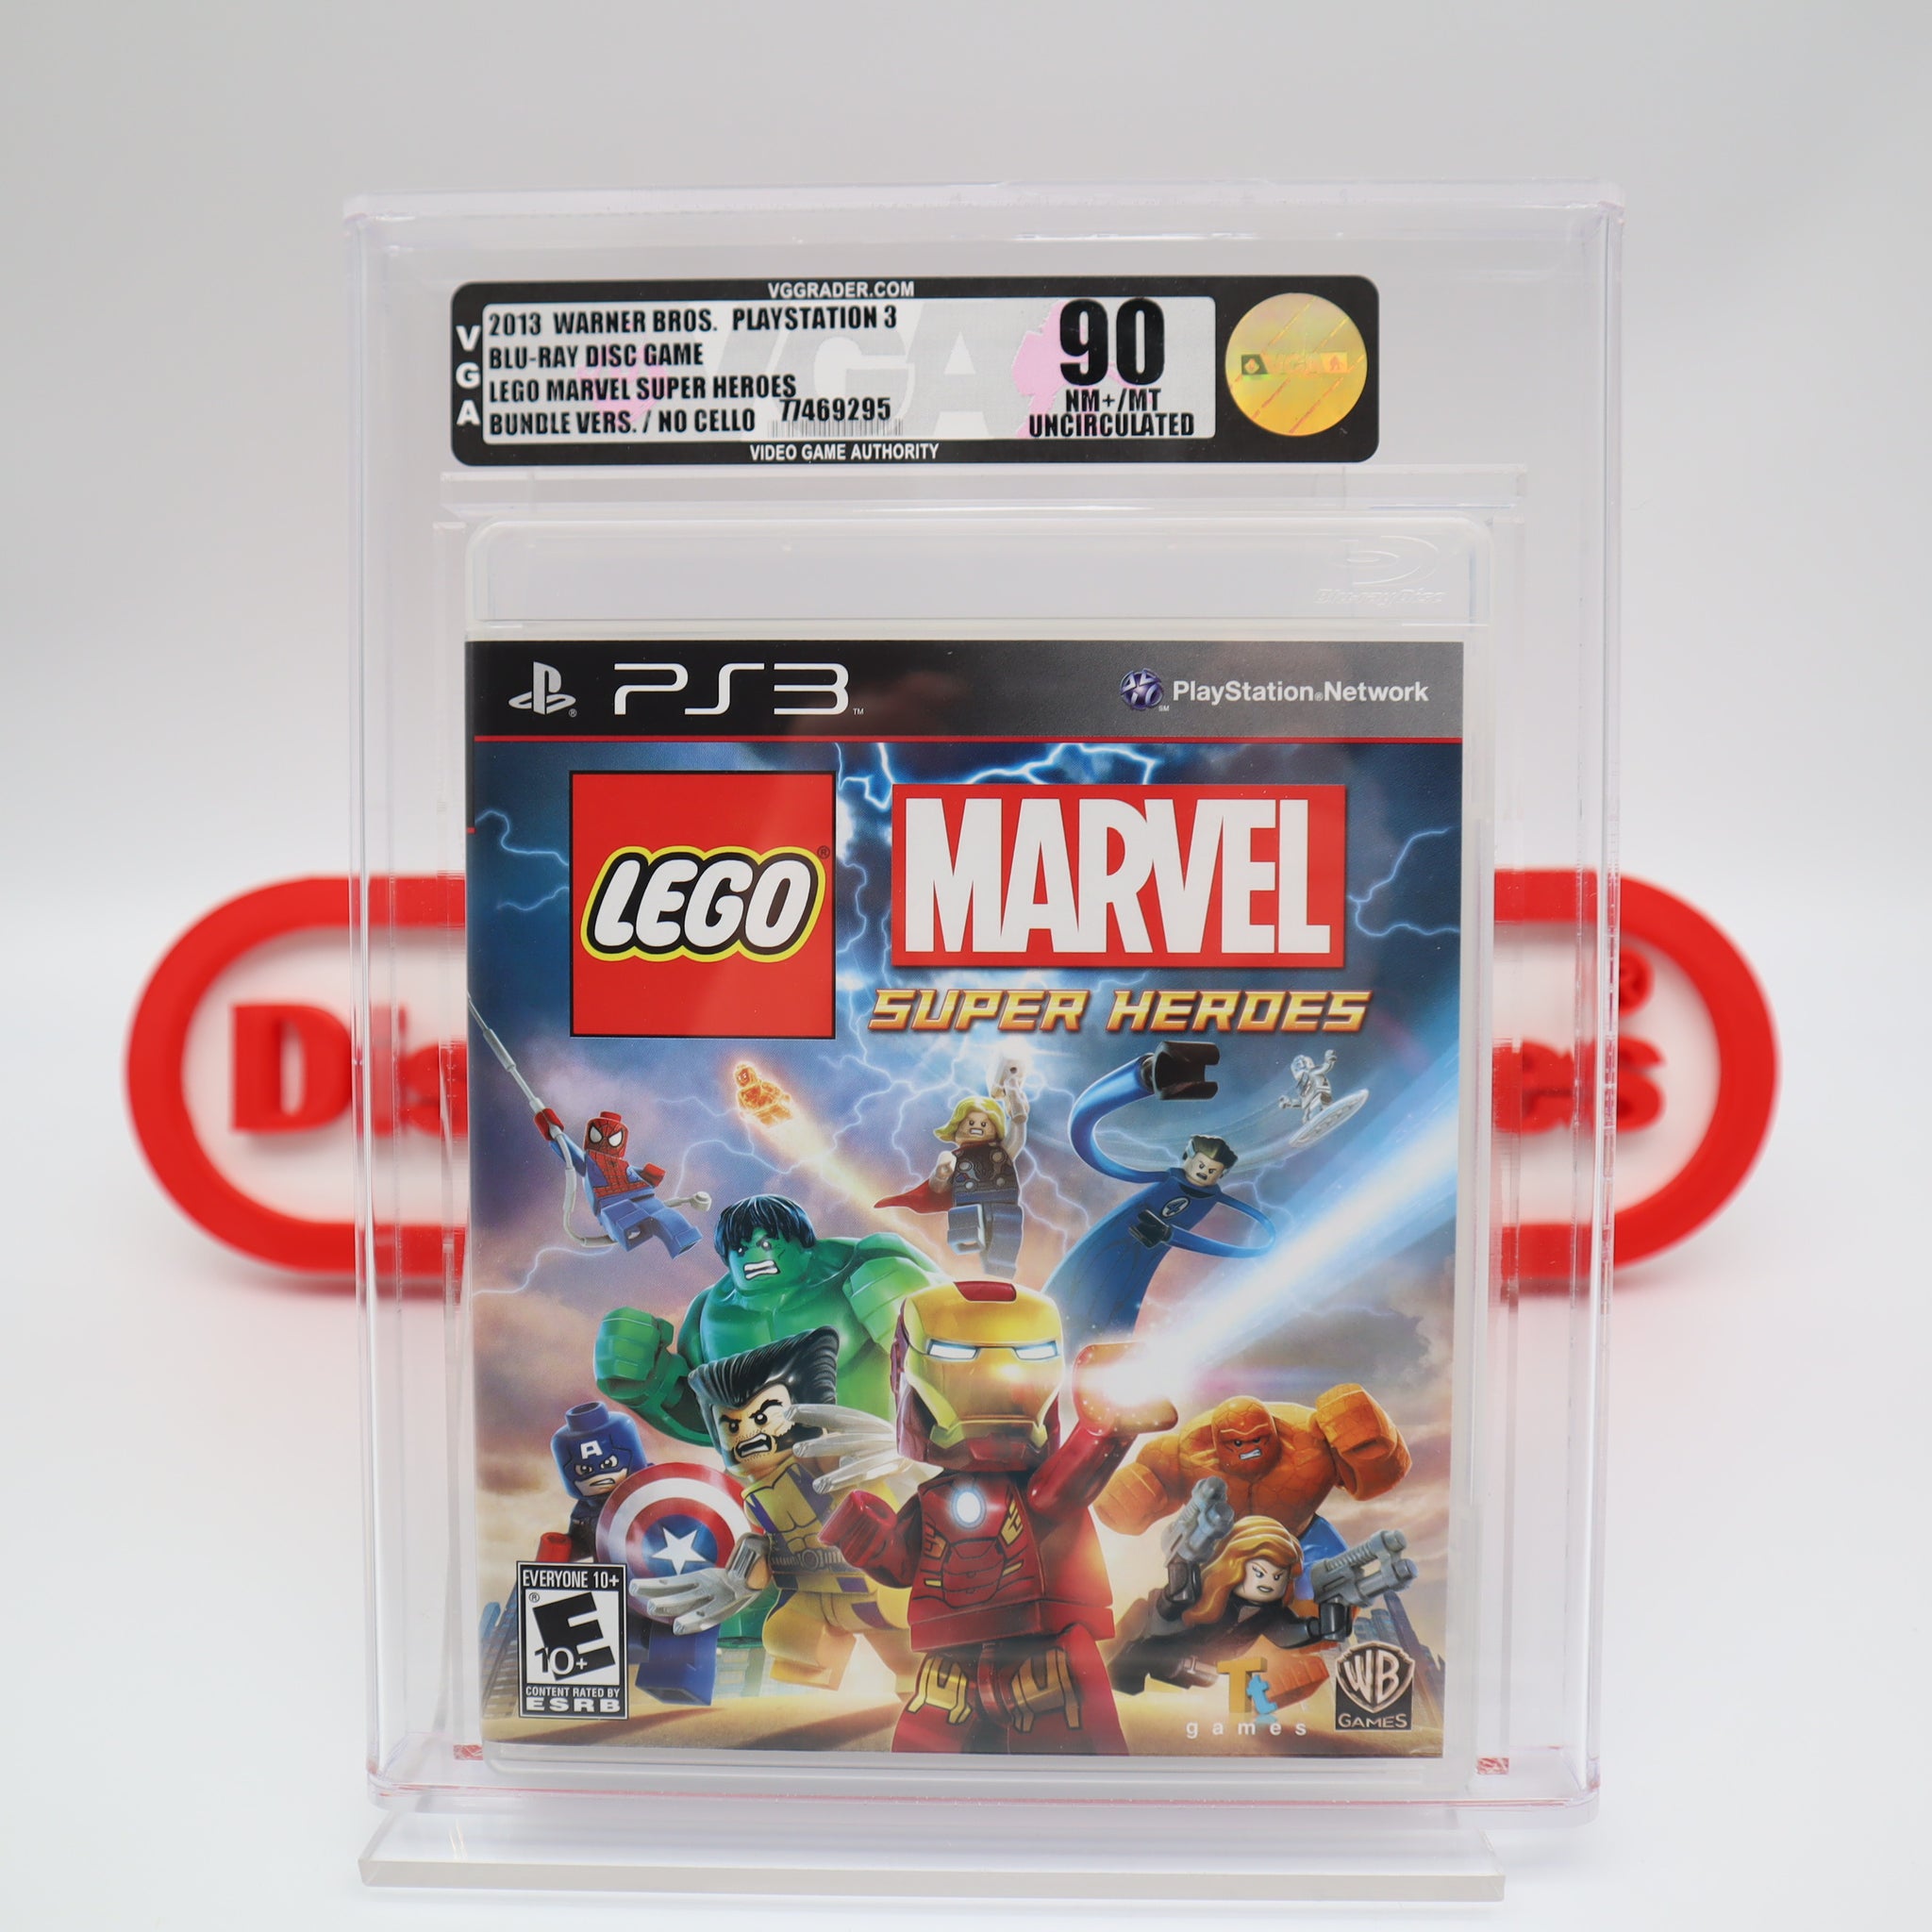 LEGO: MARVEL SUPER HEROES - VGA GRADED 90 MINT GOLD! UNCIRCULATED